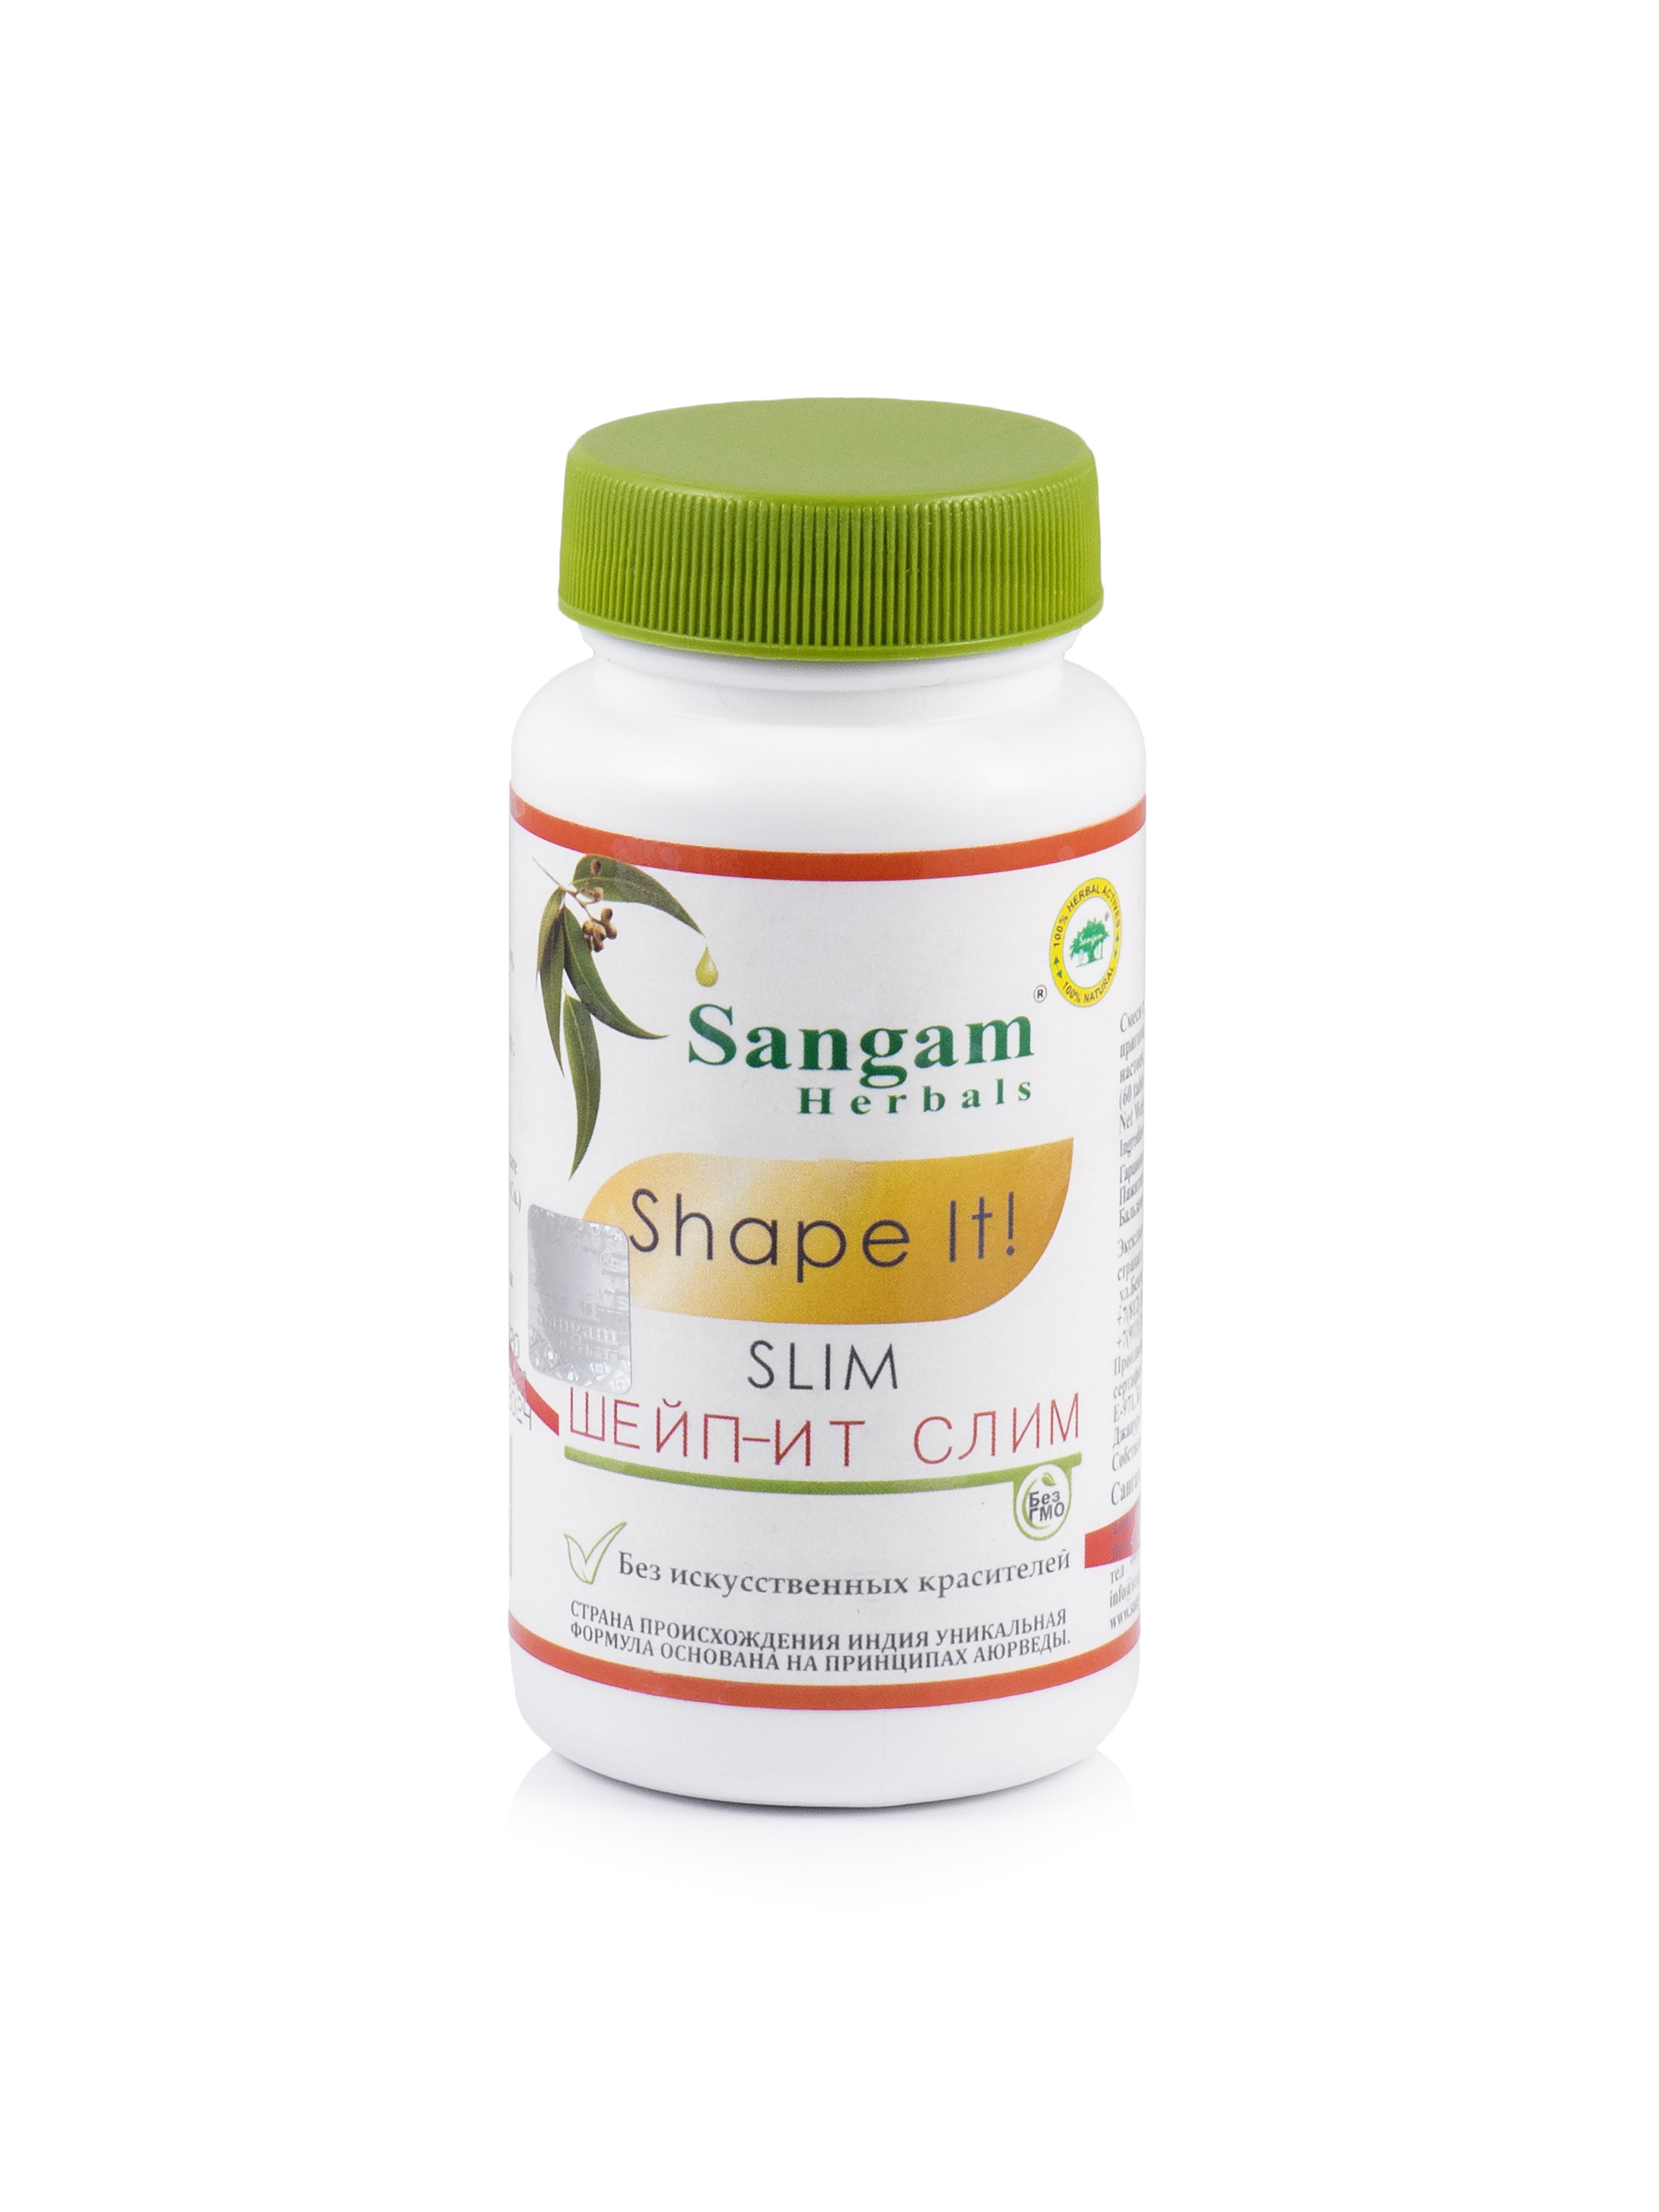 SHAPE IT SLIM, Sangam Herbals (ШЕЙП-ИТ СЛИМ, Сангам Хербалс), 60 таб. по 750 мг.